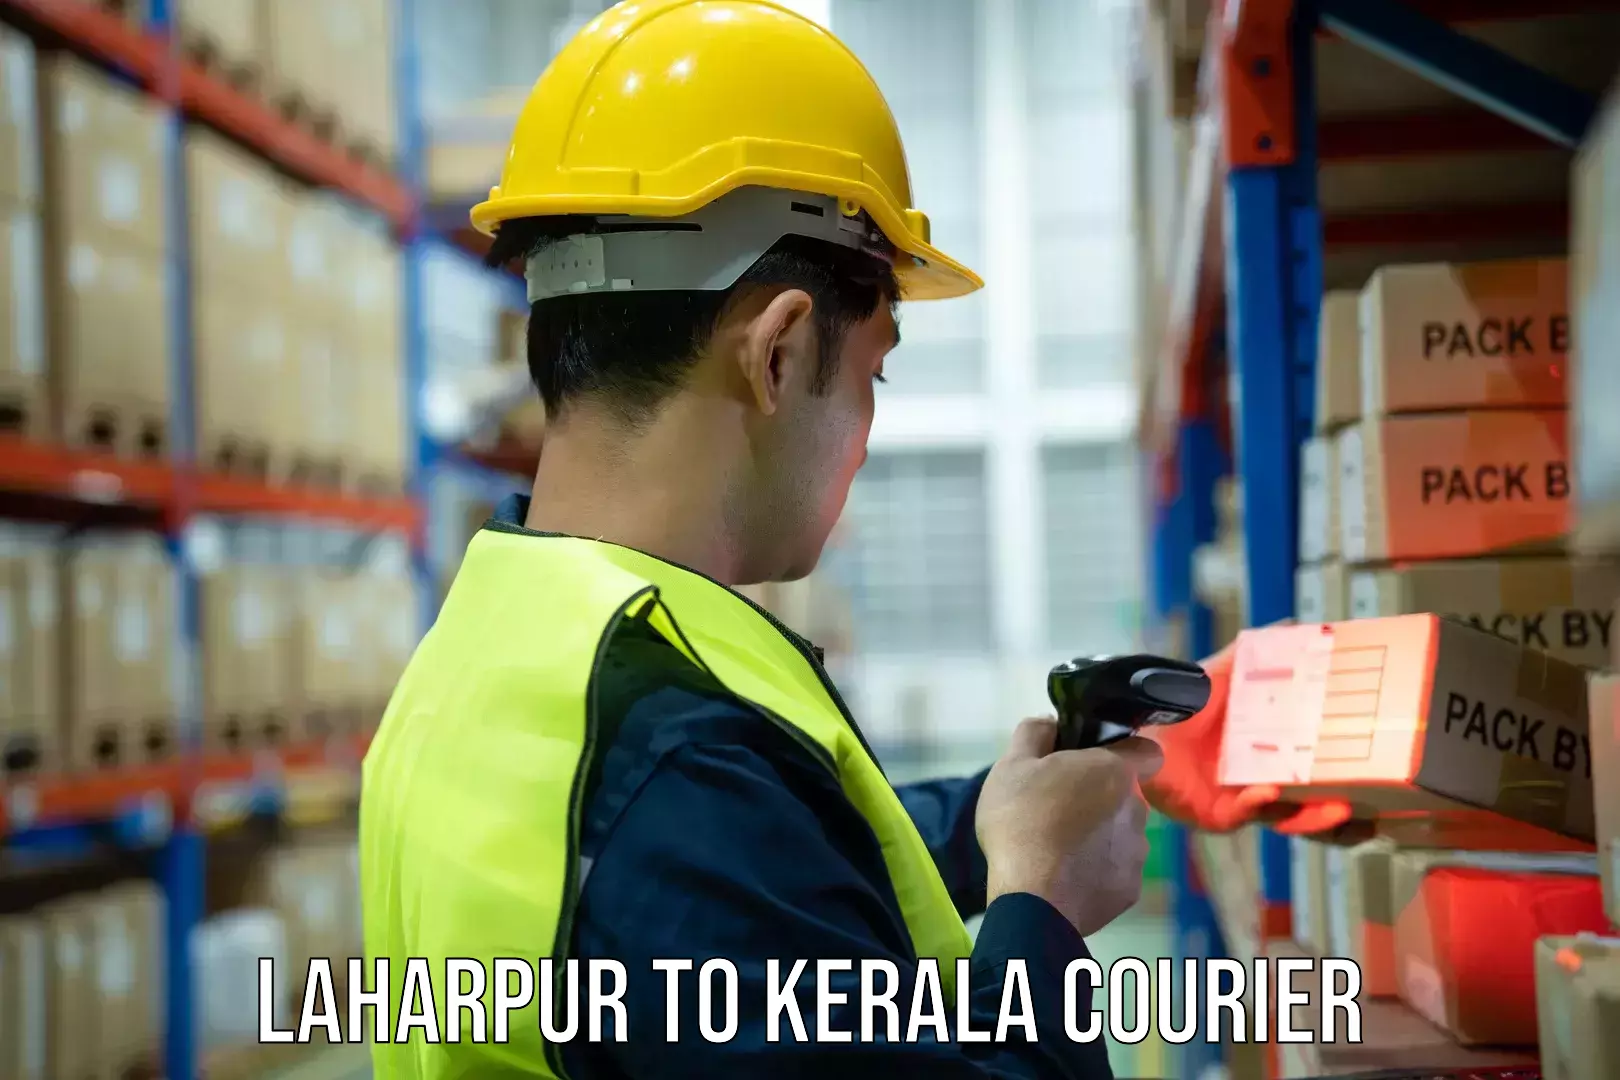 Efficient cargo handling Laharpur to Rajamudy